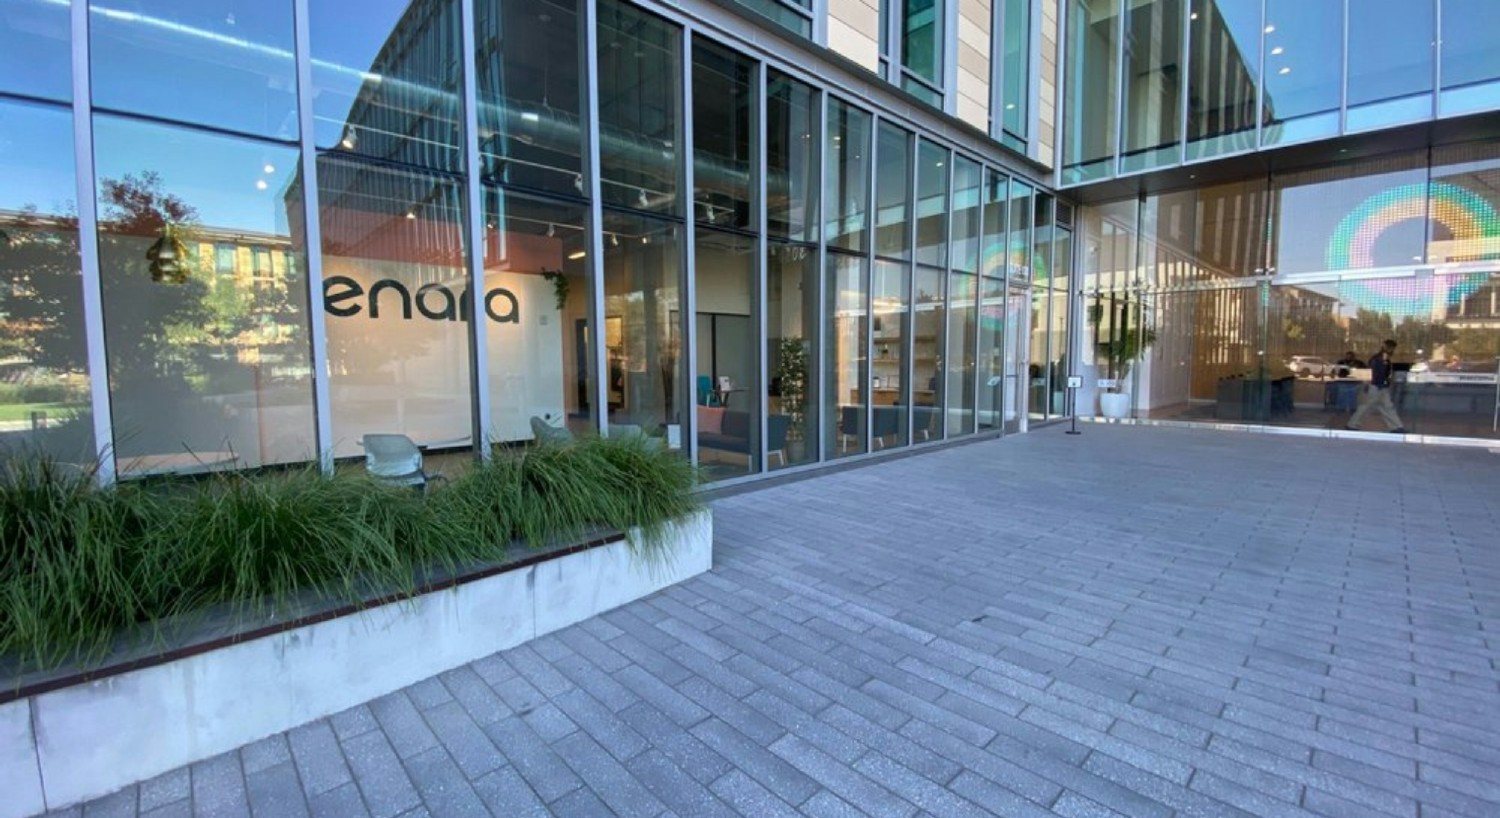 Enara Health headquarters. Located in San Mateo, California